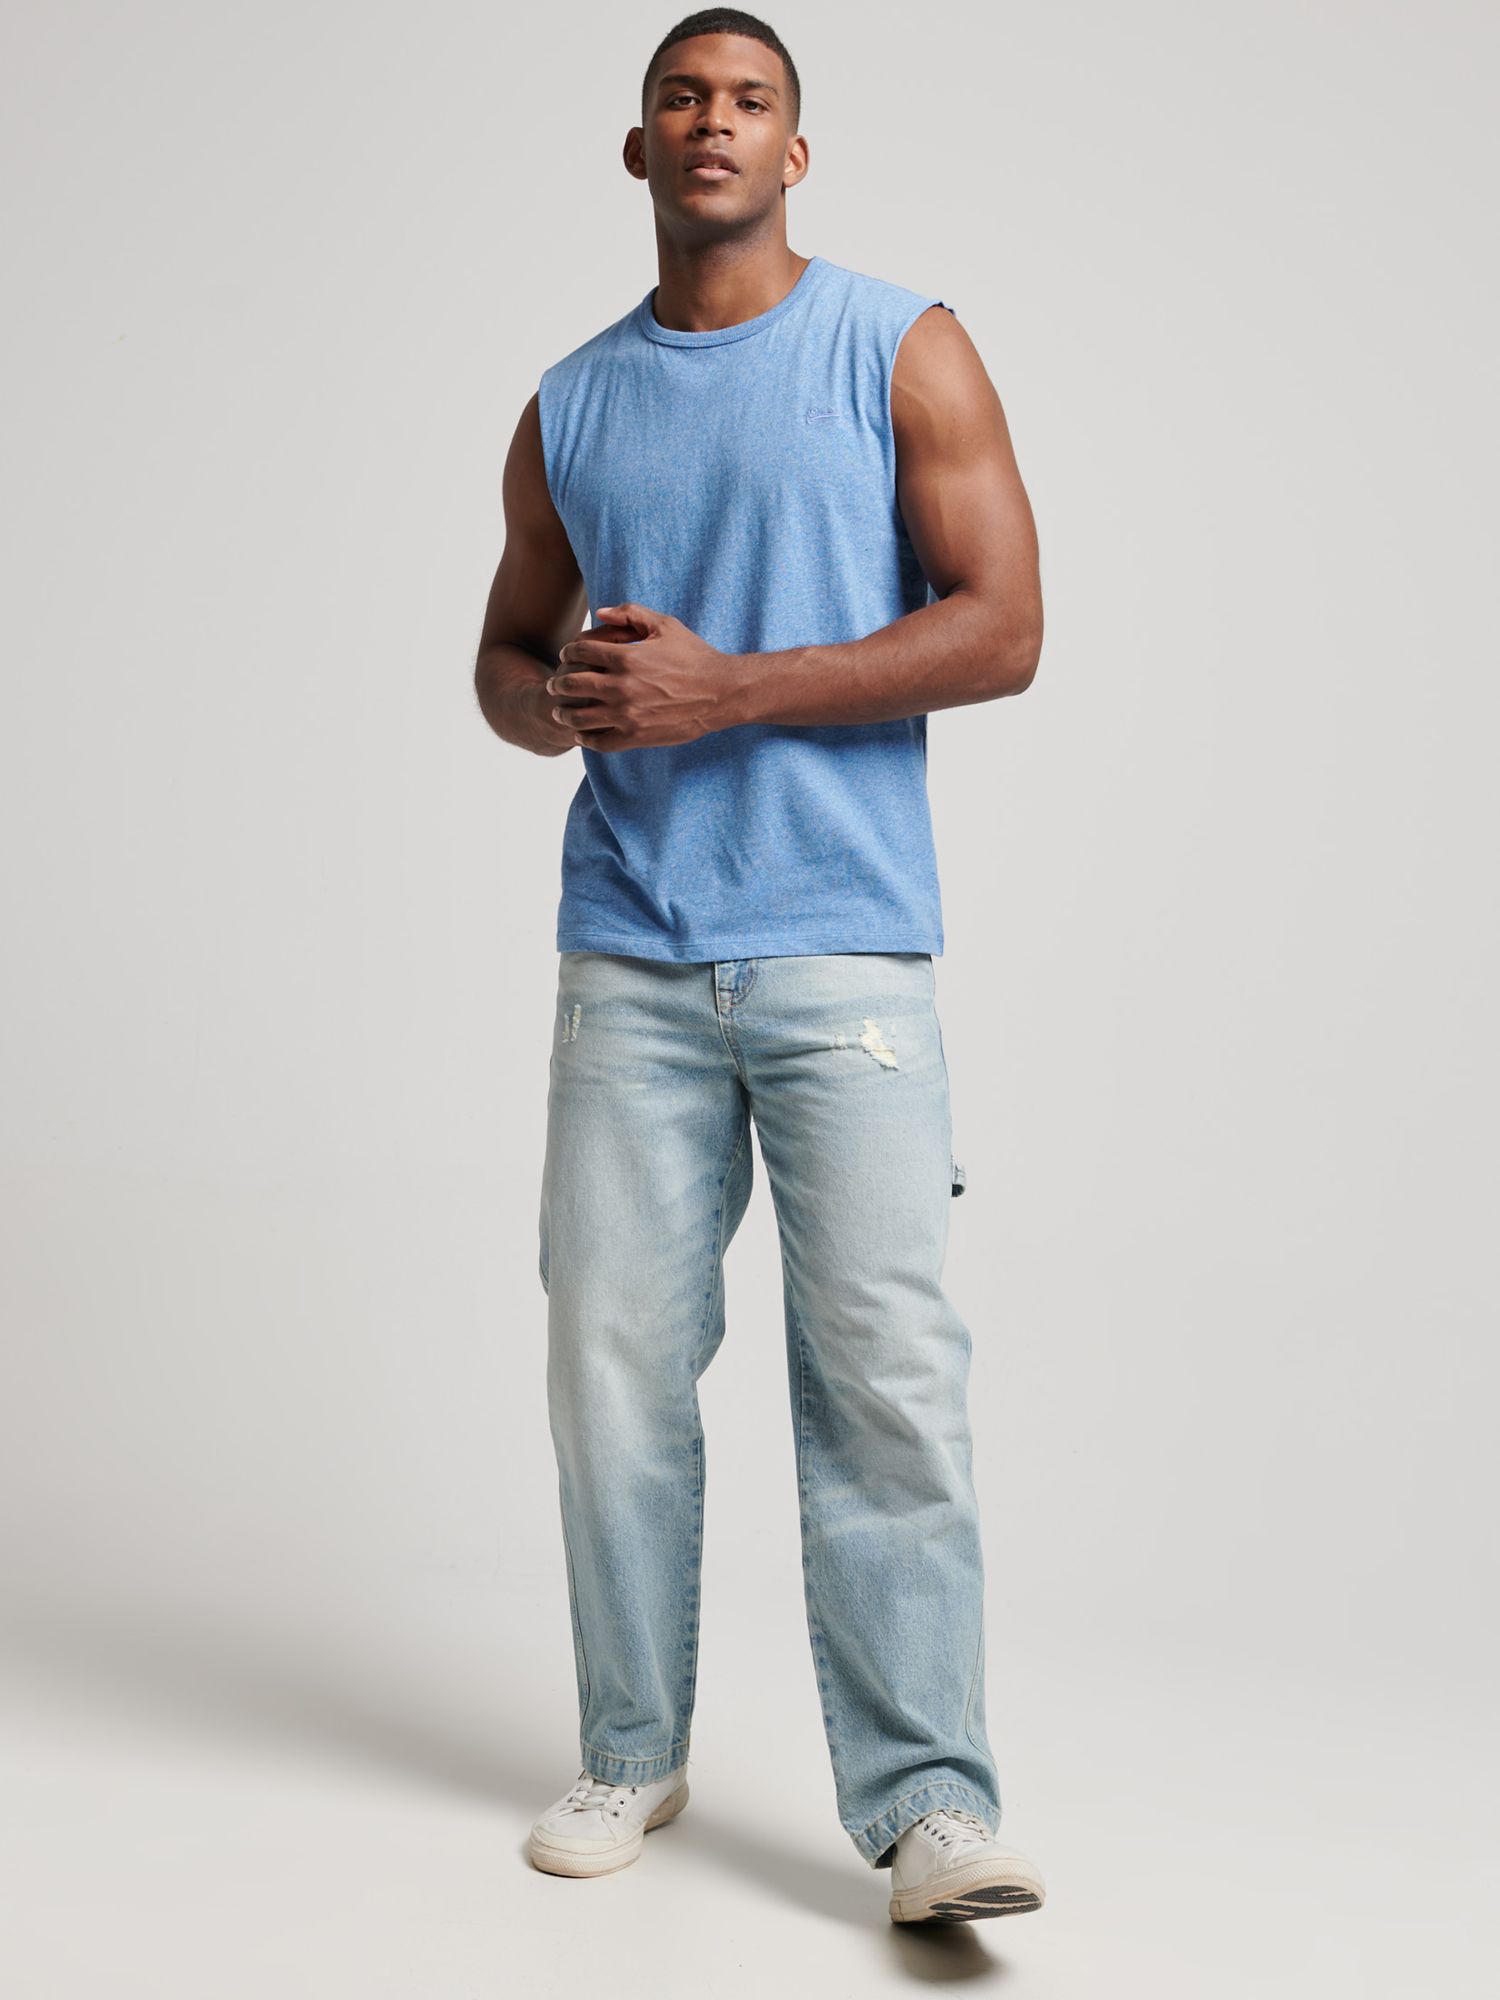 Men's Organic Cotton Essential Logo Tank Top in Bright Blue Grit